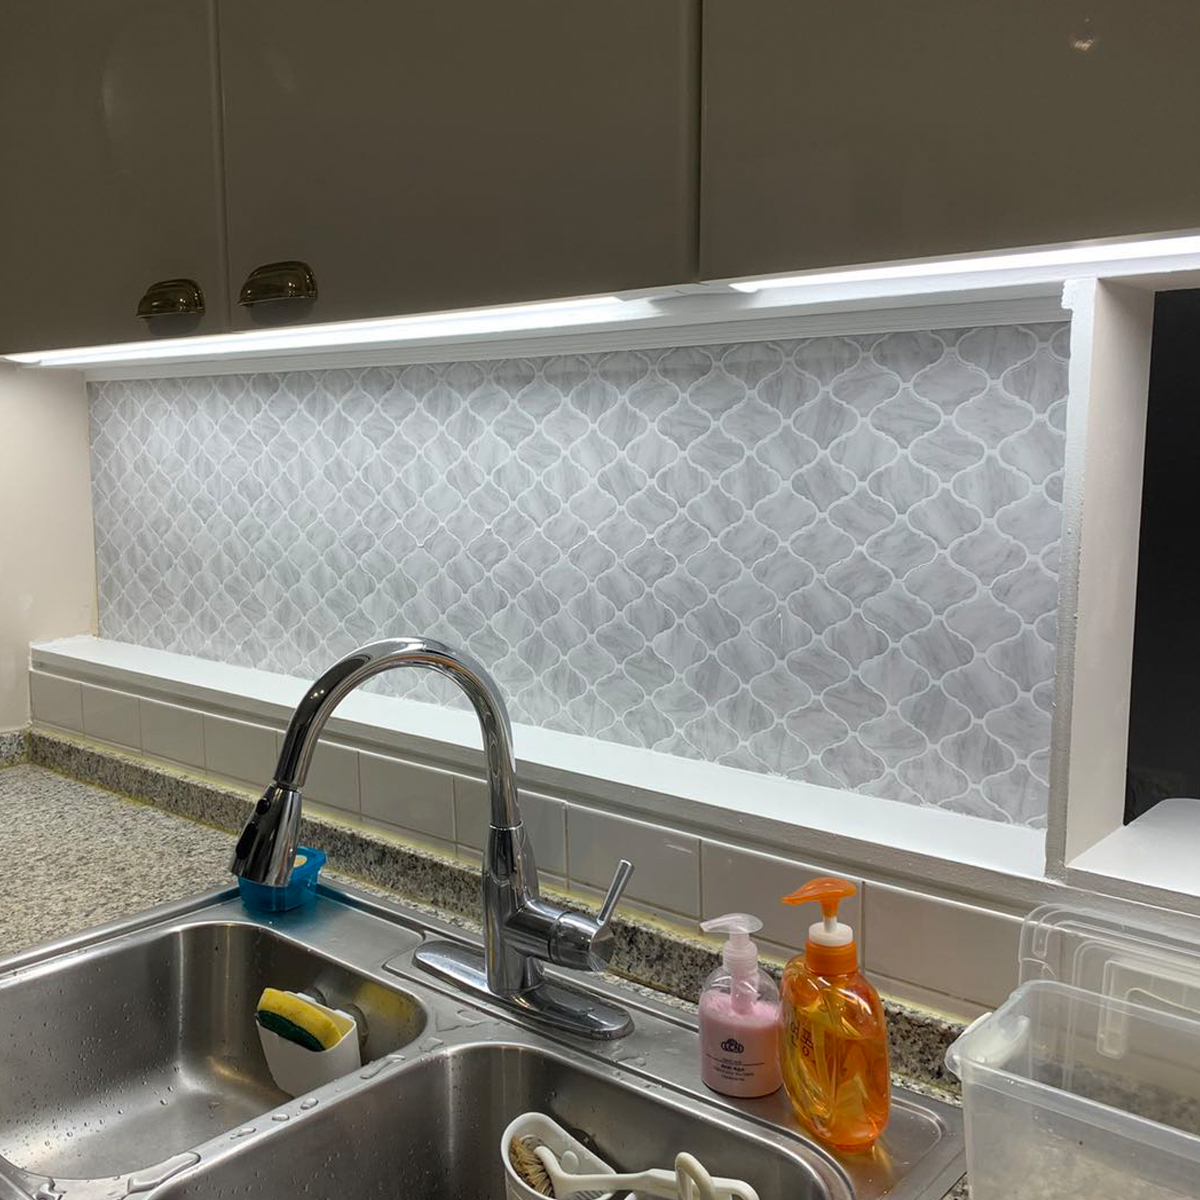 DIY-3D-Self-Adhesive-Wall-Tile-Sticker-Vinyl-Home-Kitchen-Bathroom-Decal-Decoration-1823170-4